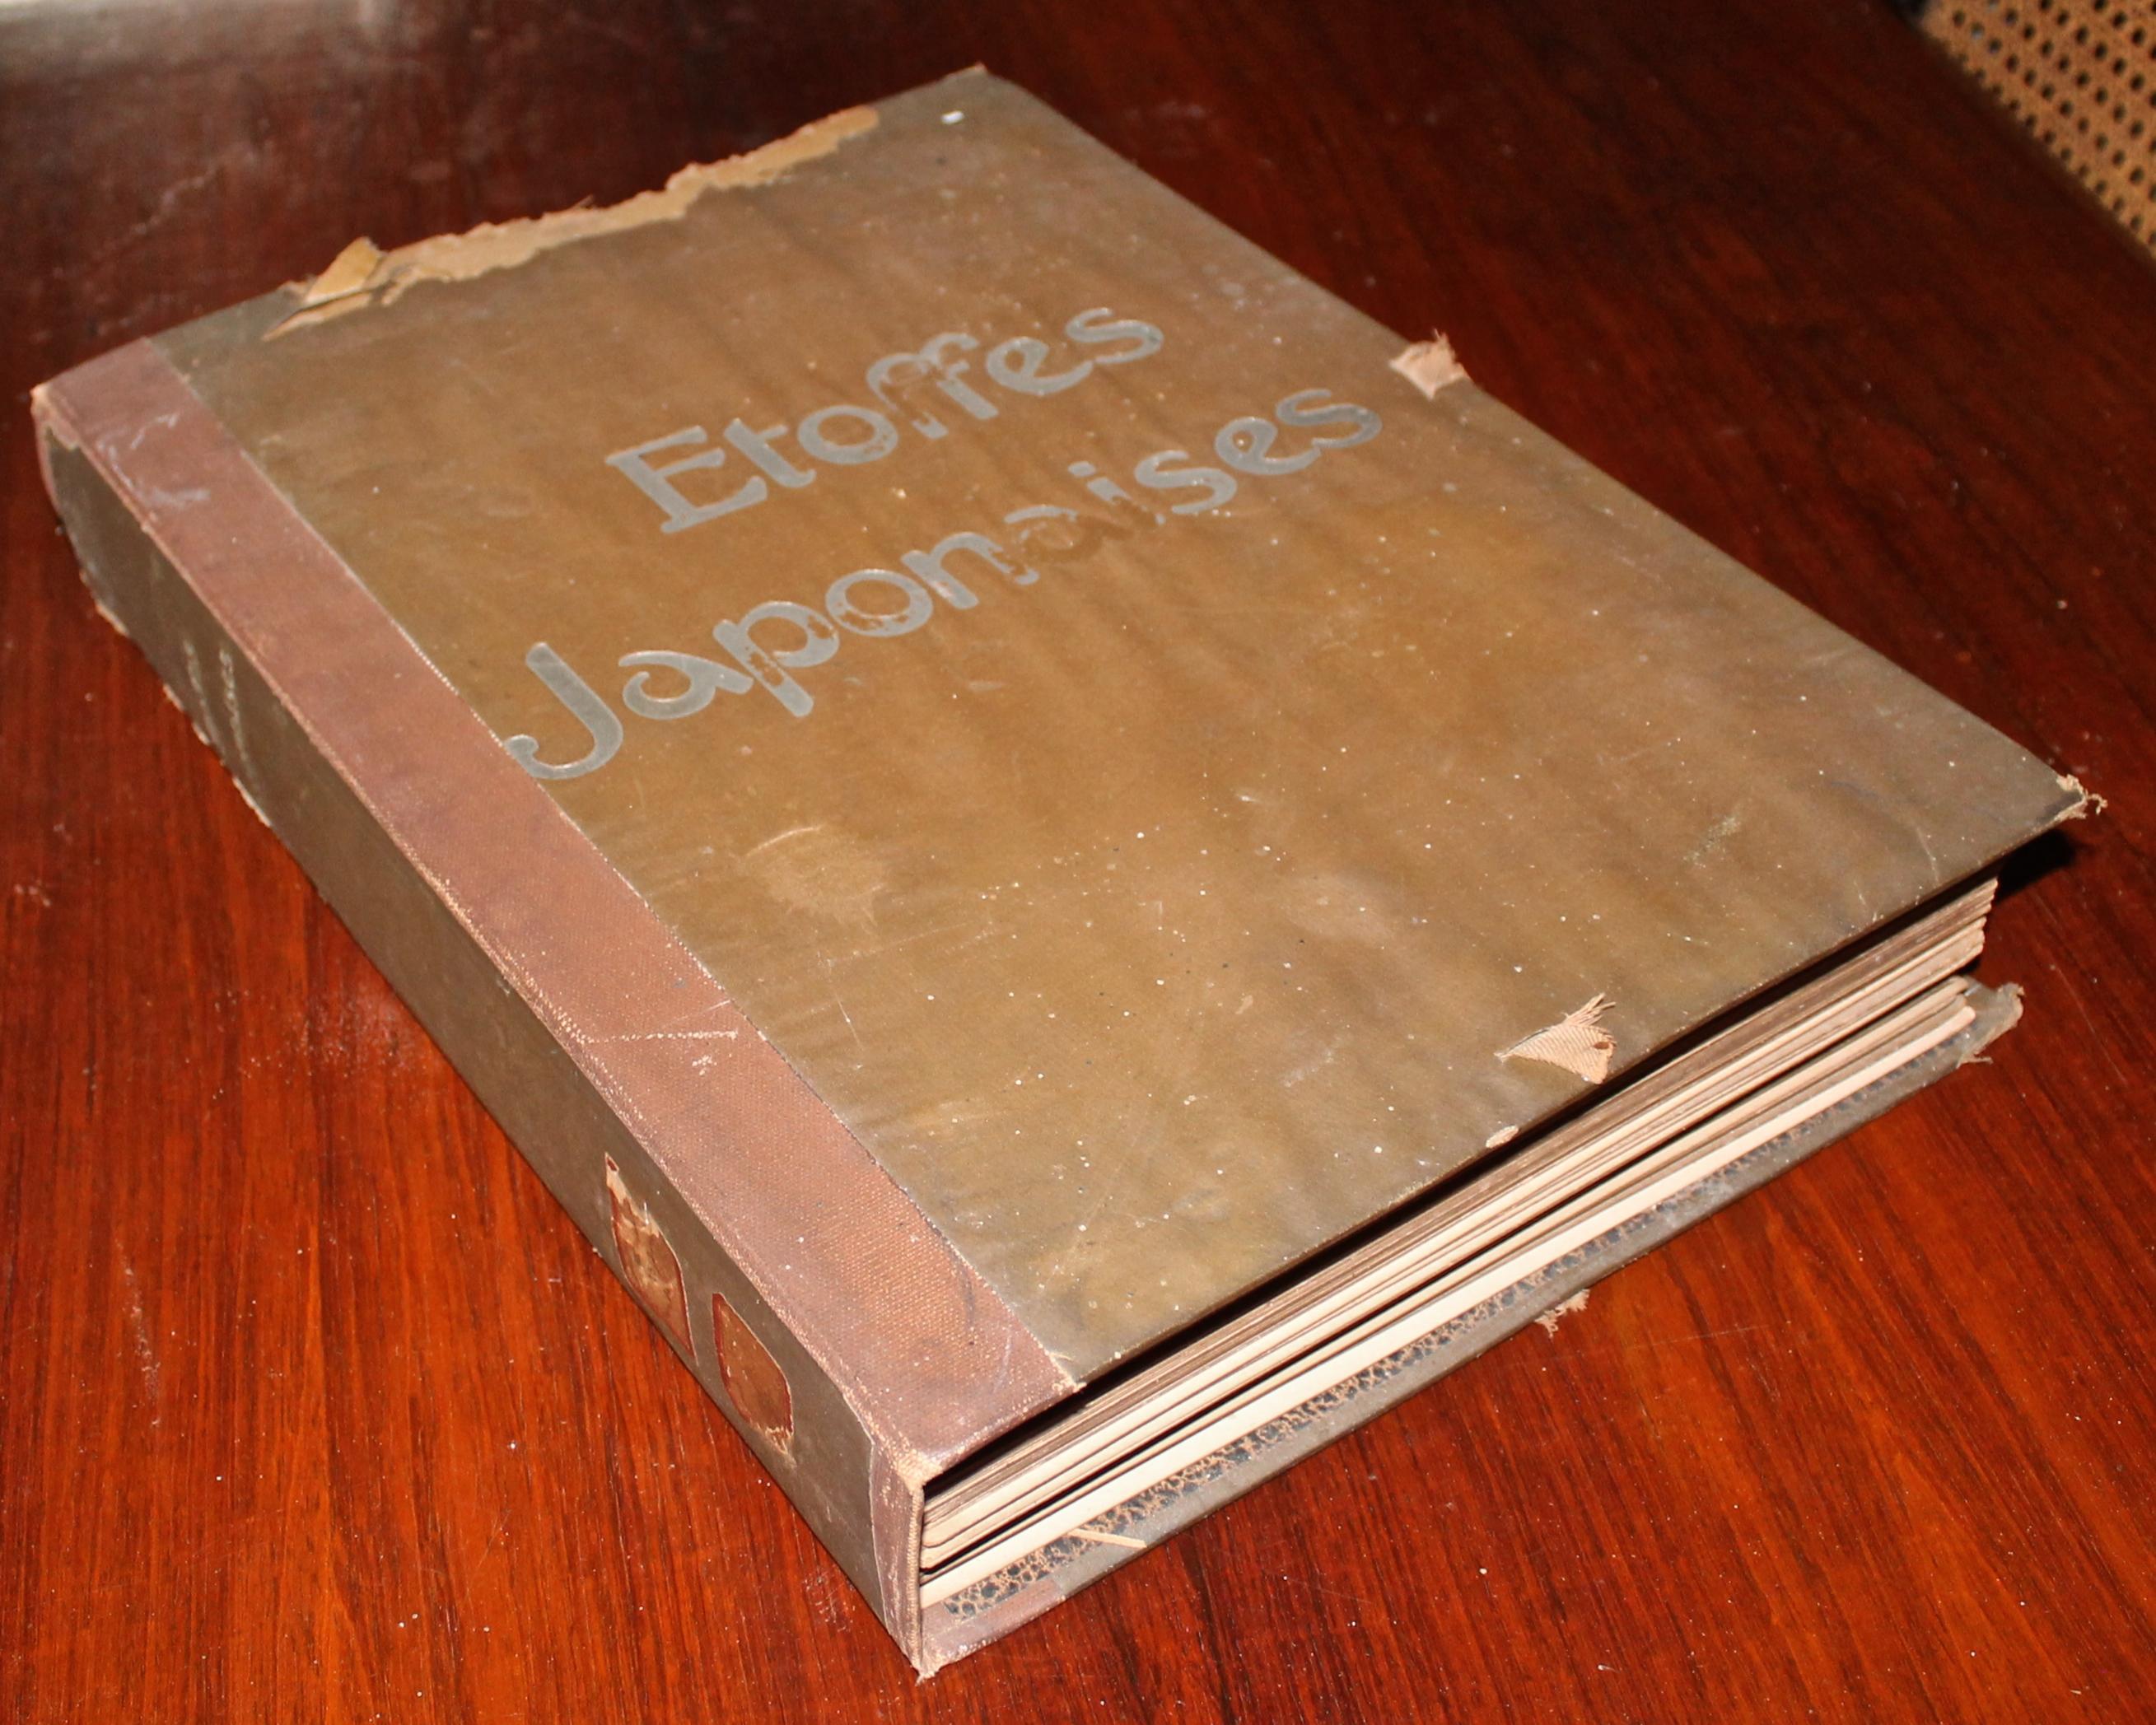 Etoffes Japonaises 'Tissues Et Brochees' Complete Folio of Fabric Designs For Sale